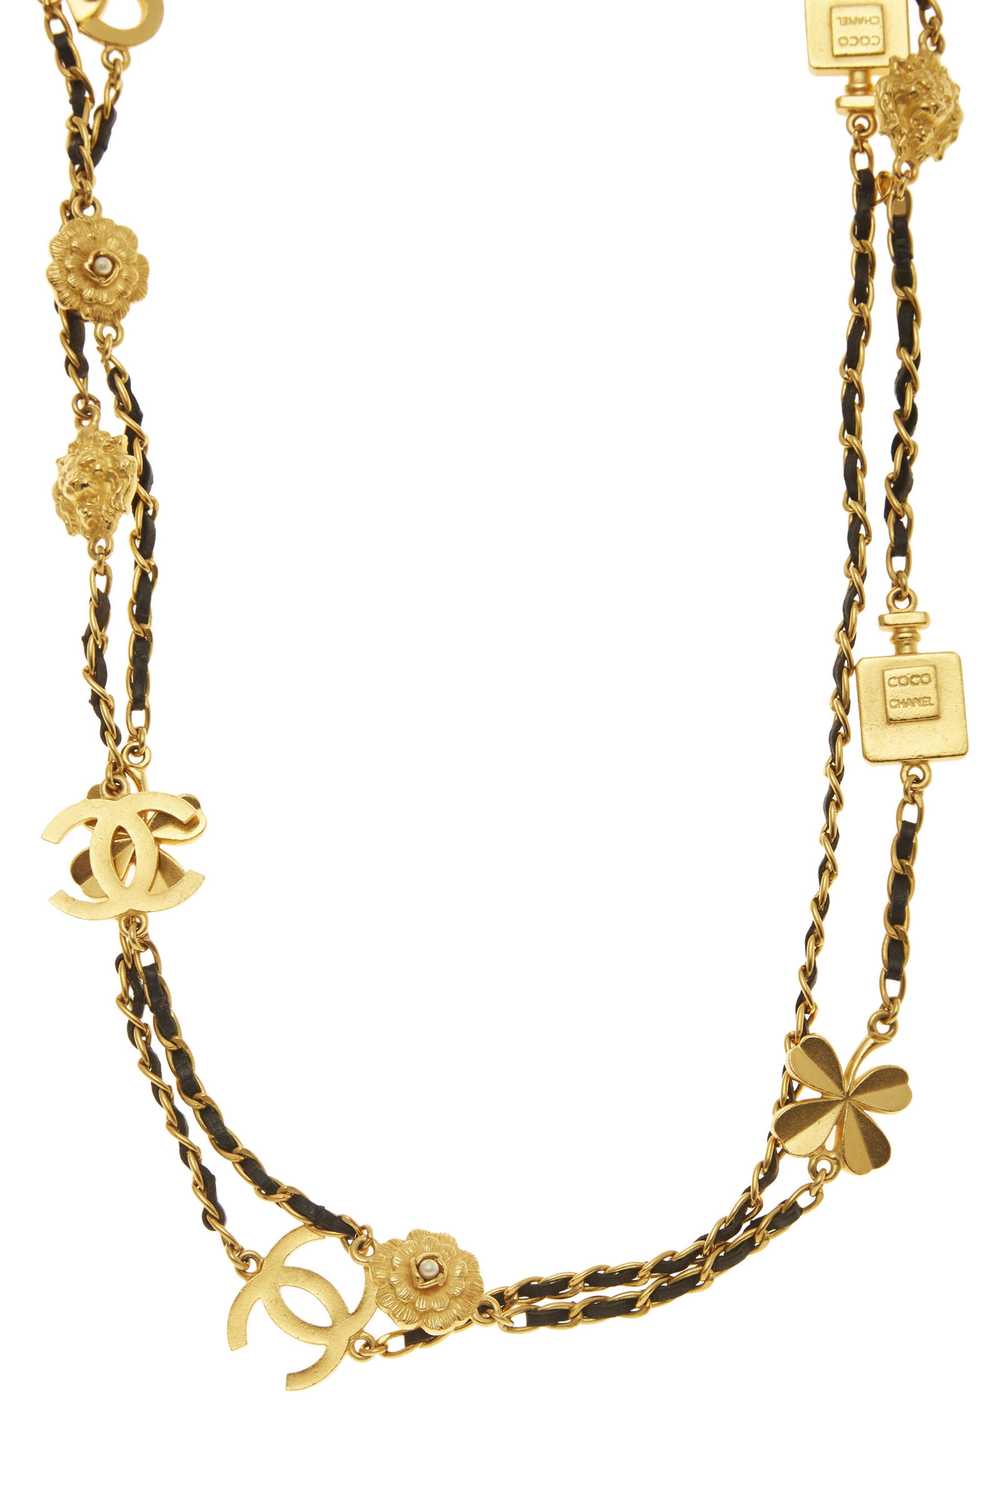 Gold & Black Enamel Icon Charms Necklace Large - image 2